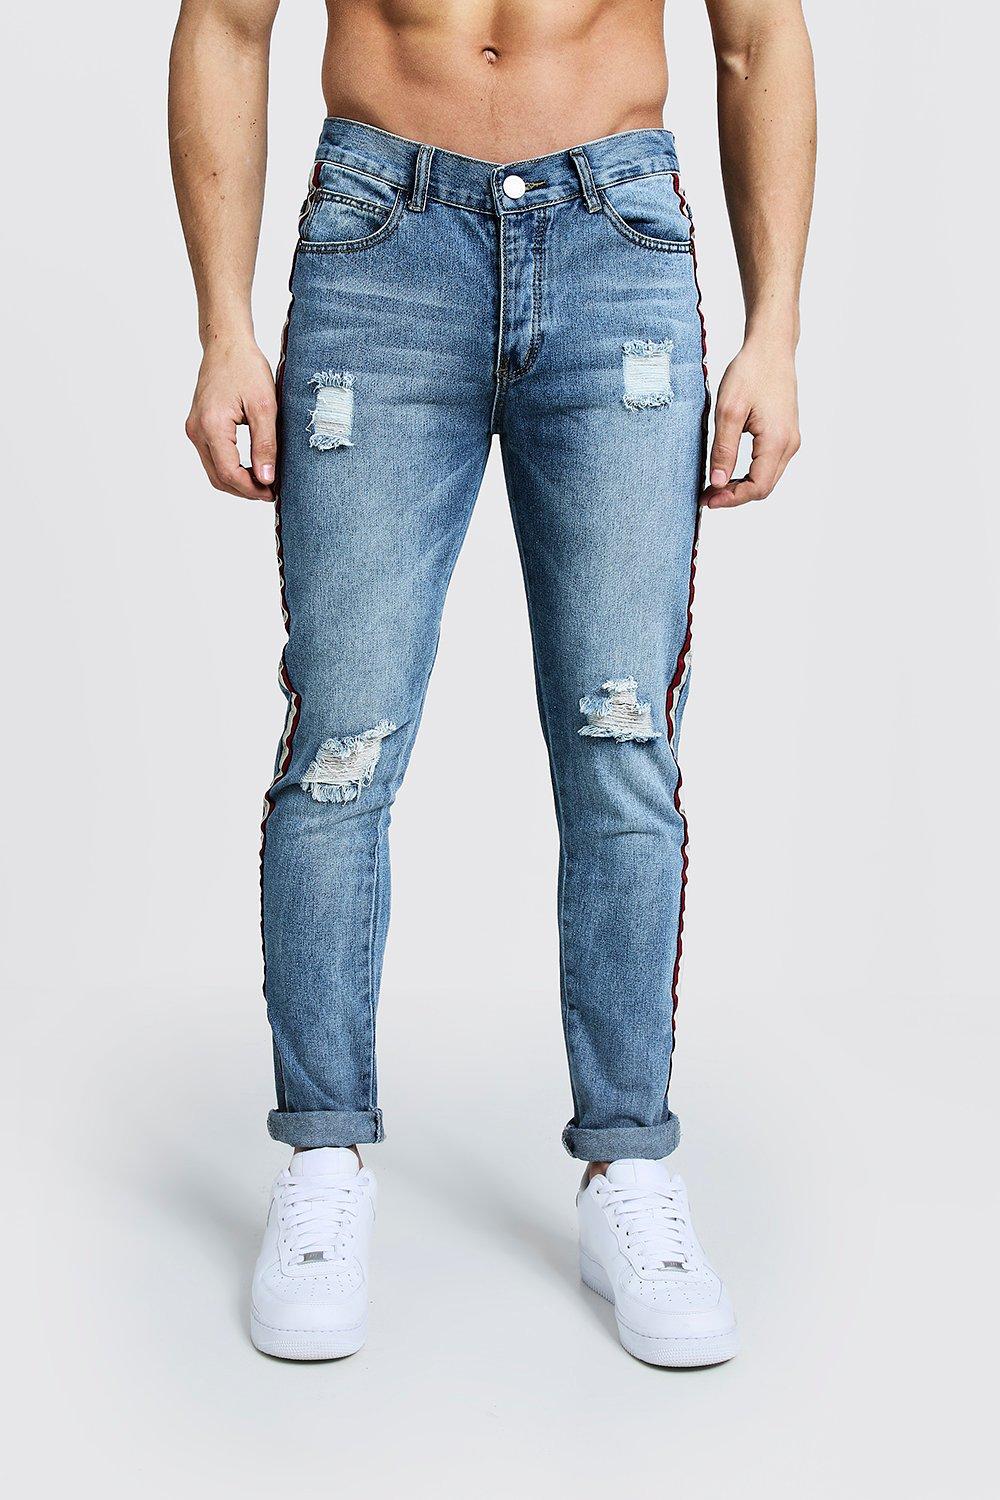 side tape jeans for mens